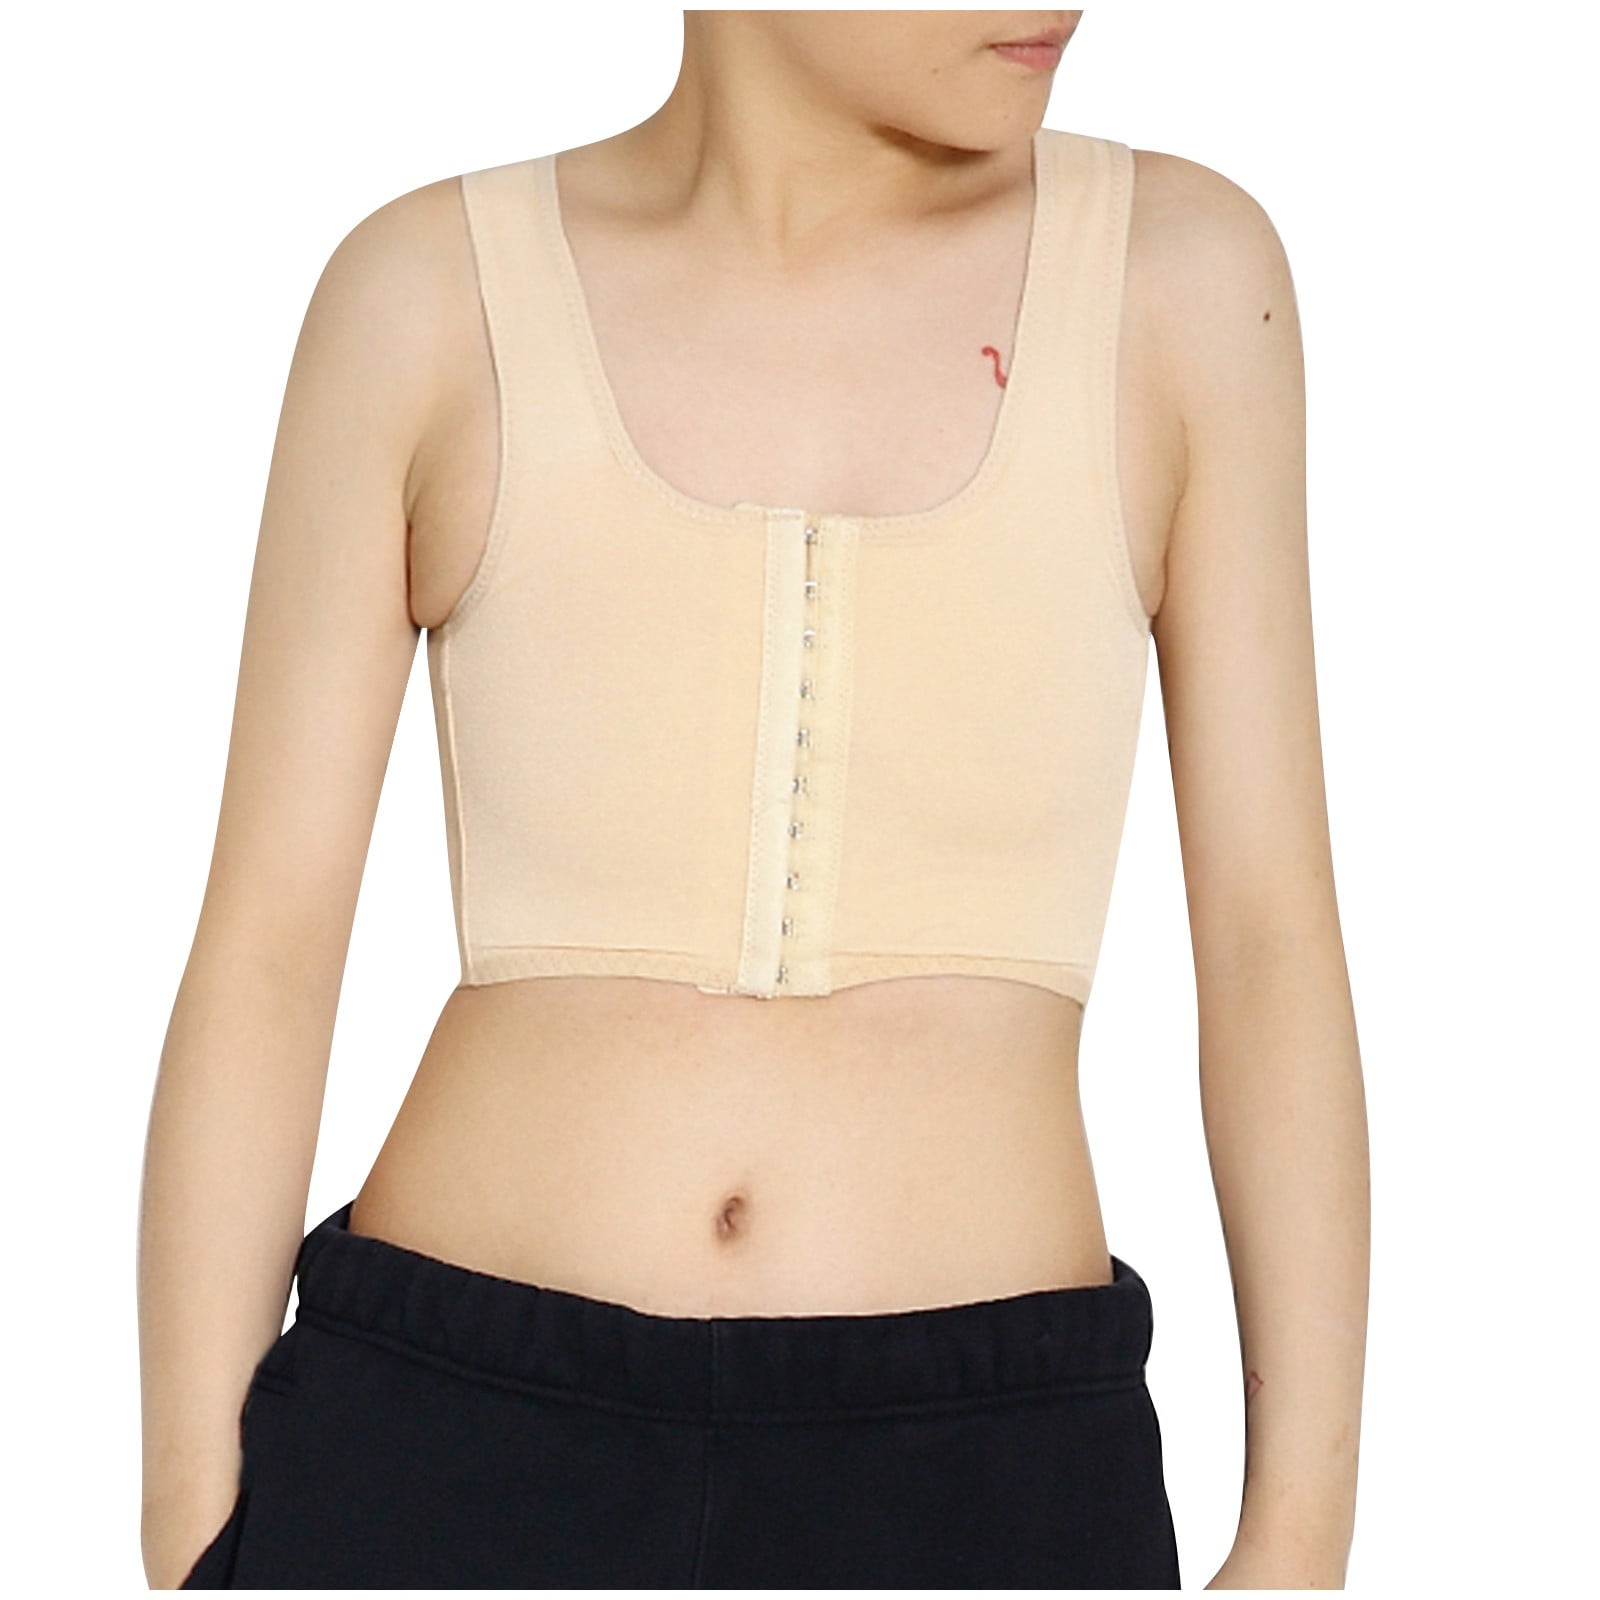 Fashion Les Sport Bra Top Chest Binder Super-elastic Bandage Strengthen  Body Sculpting Top Cotton Bras Vest Undershirt Flat Breast Tops